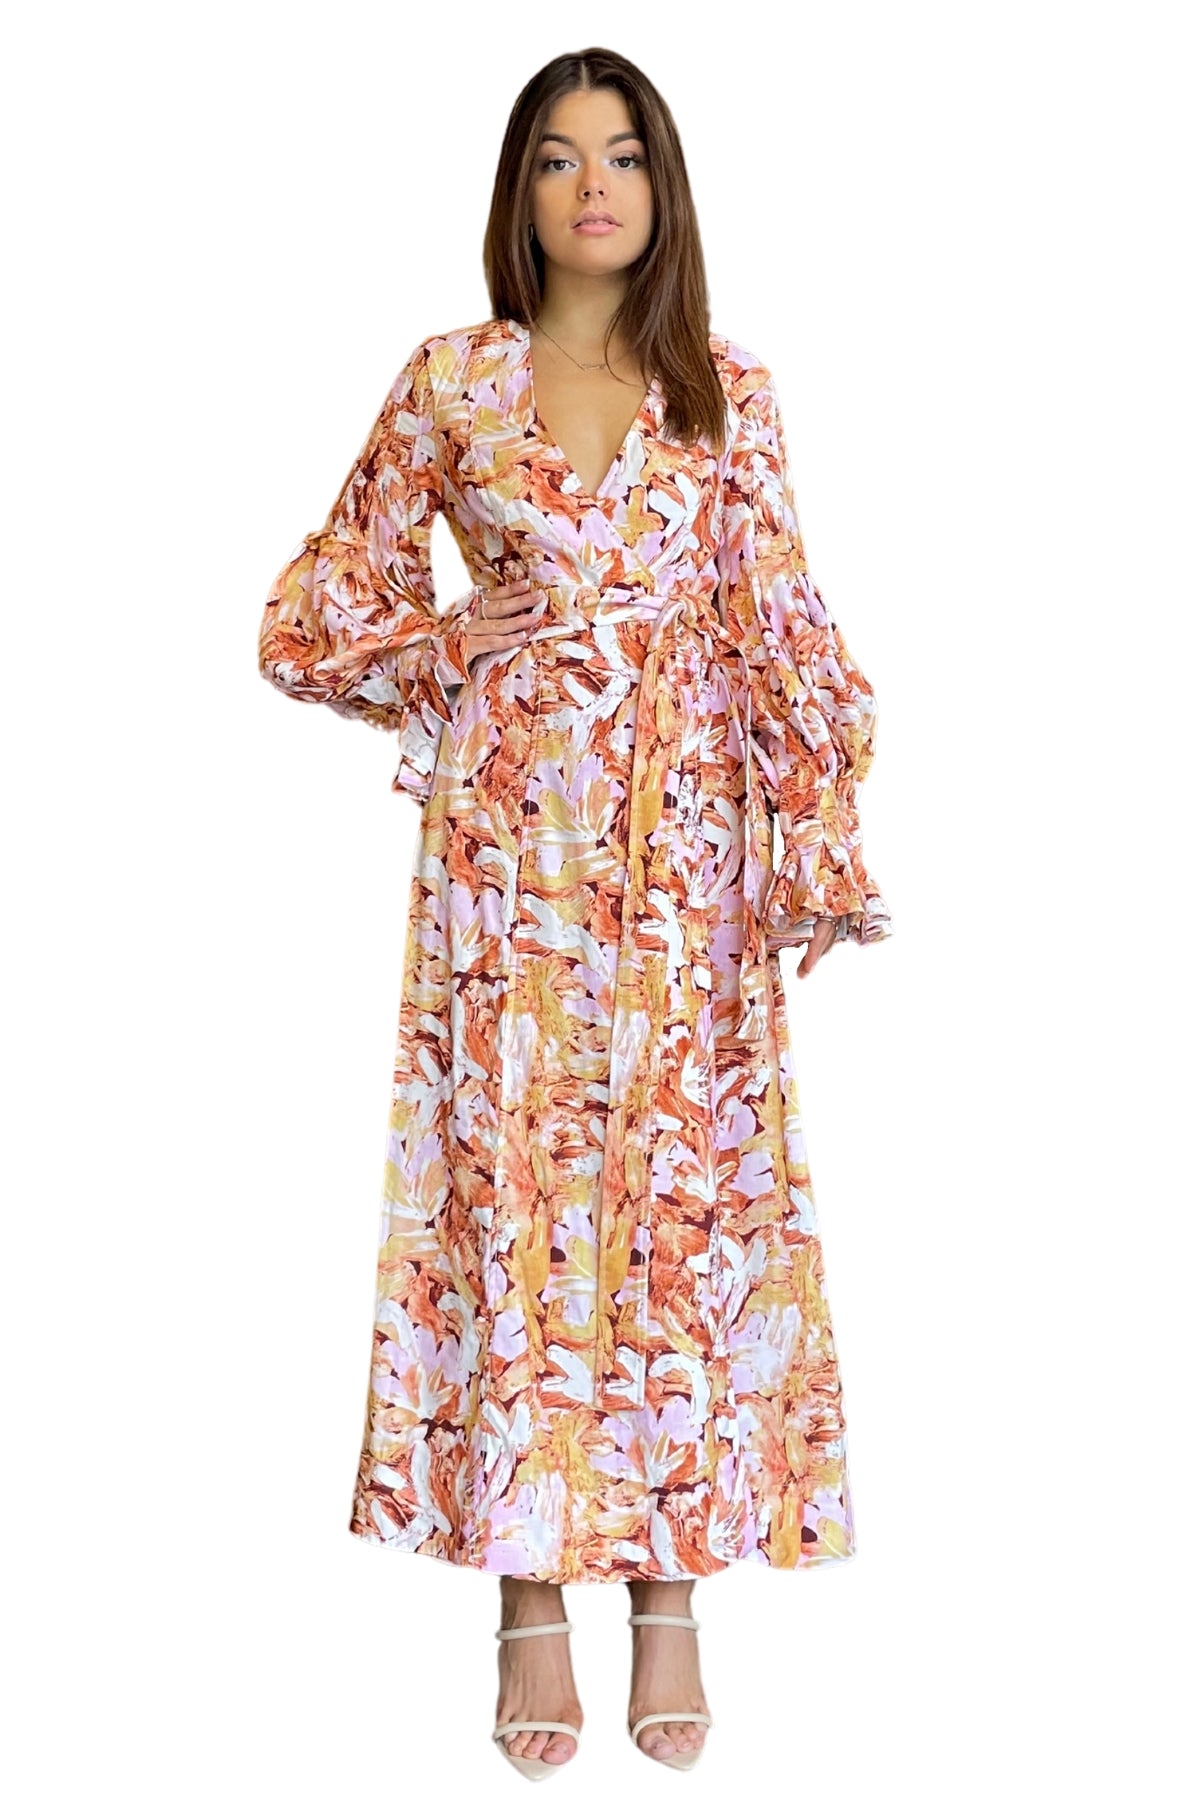 Acler ACLER Lydford Dress (Lilac brush) - RRP $550 - 1_023b5417-0edc-481f-8269-d478c2037c90.jpg